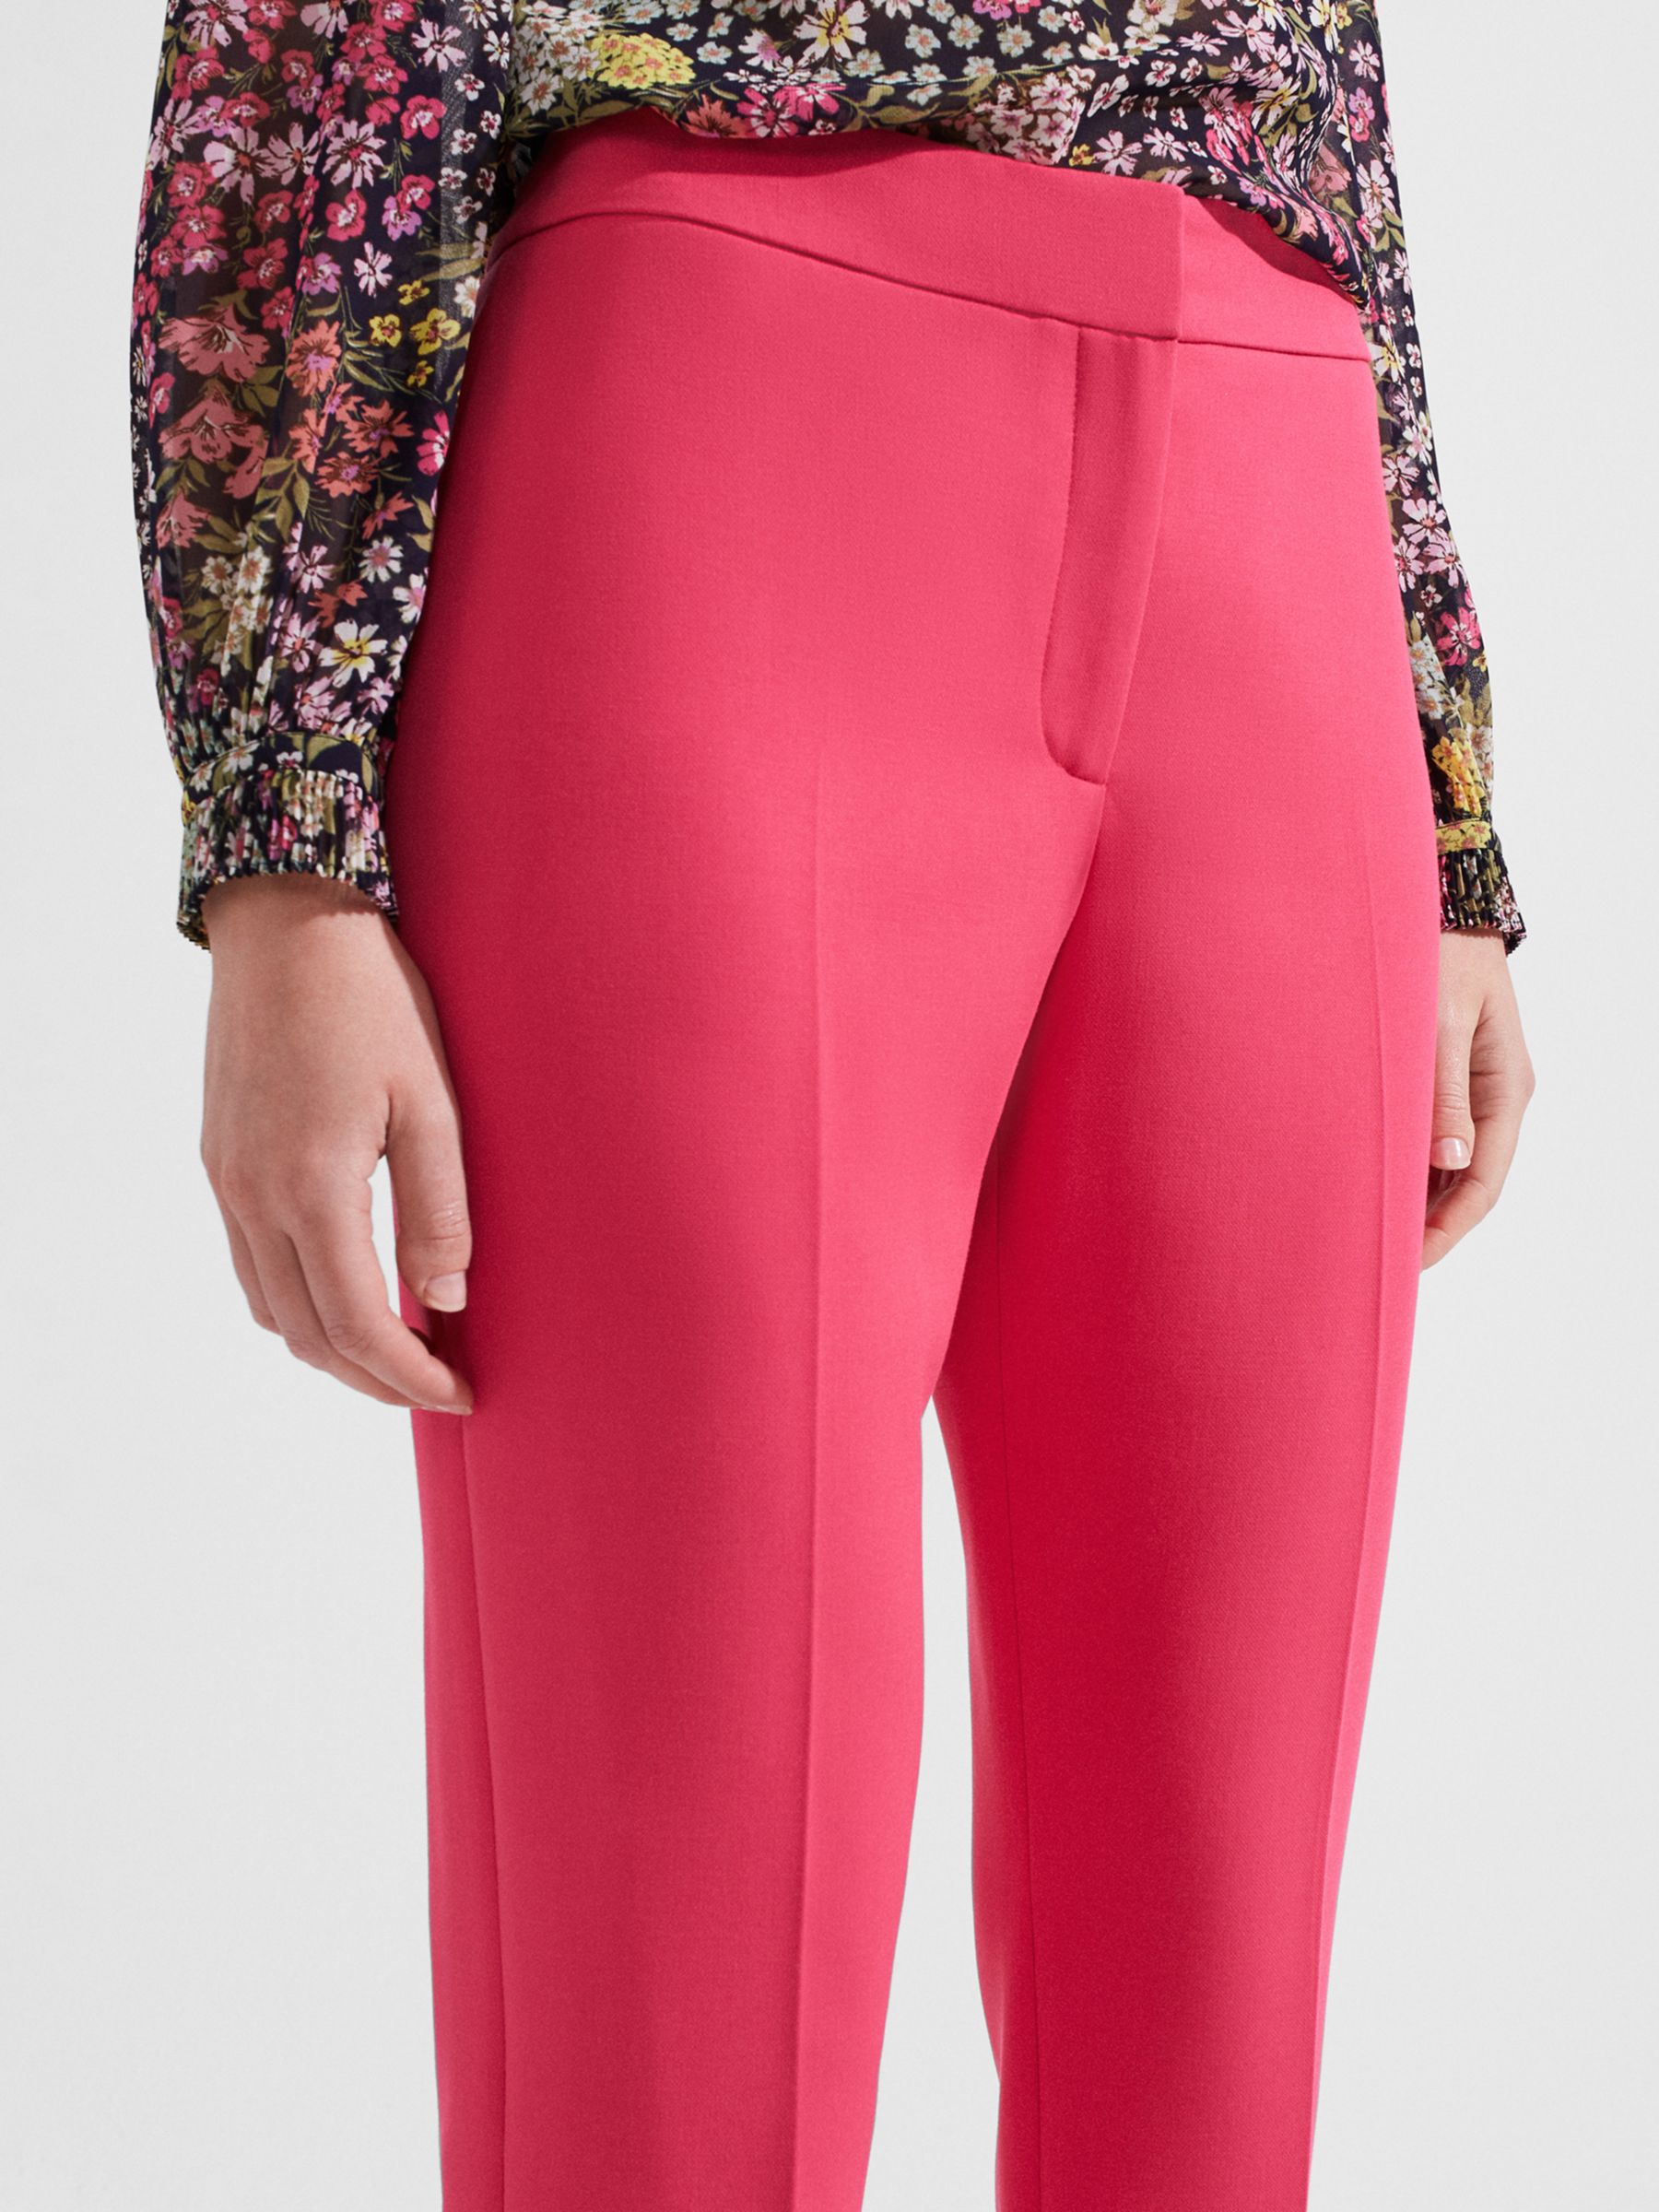 Hobbs Kaia Slim Trousers, Geranium Pink, 8